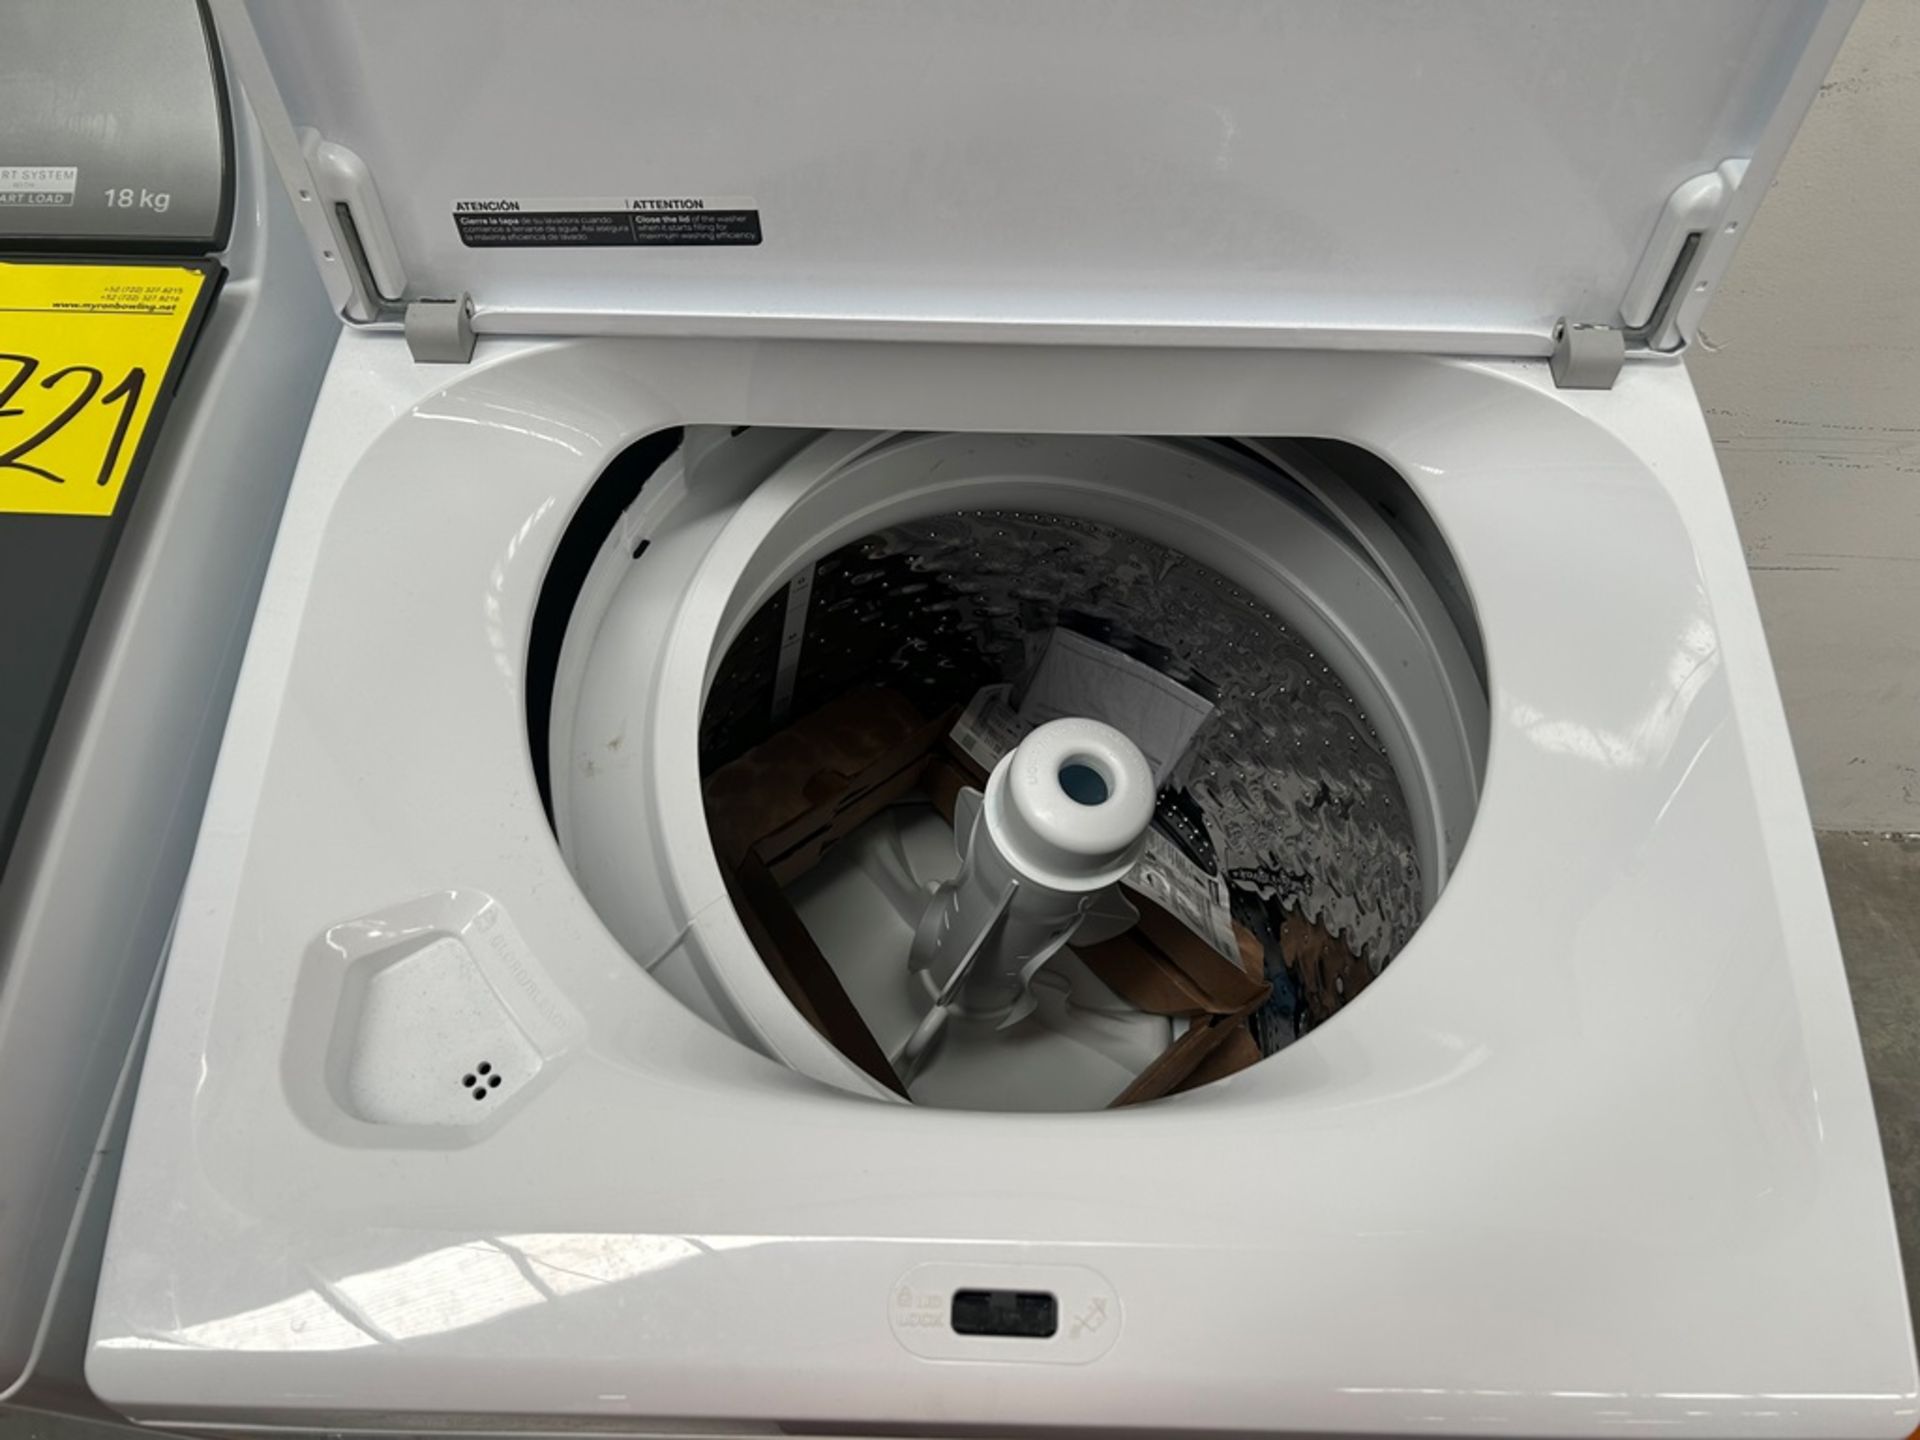 Lote de 2 lavadoras contiene: 1 Lavadora de 18 KG, Marca WHIRPOOL, Modelo 8MWTW1812WPM0, Serie 4664 - Image 5 of 11